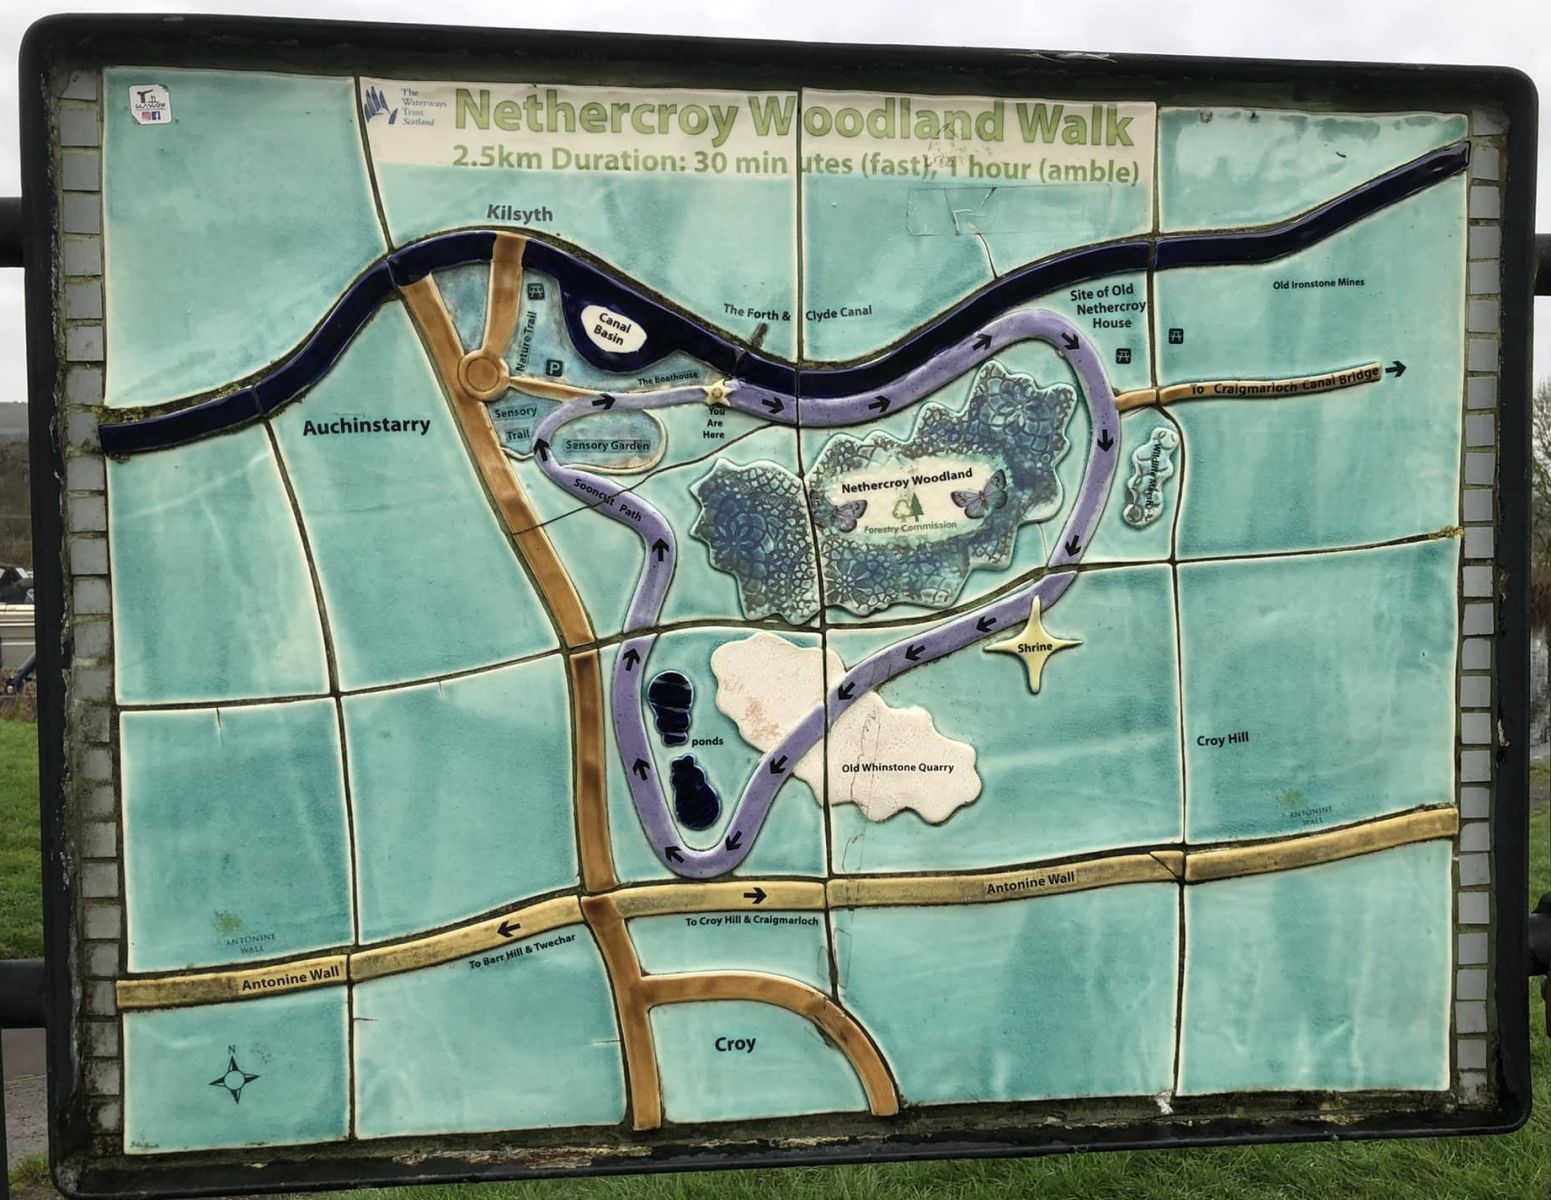 Map of Auchinstarry Forestry Walk